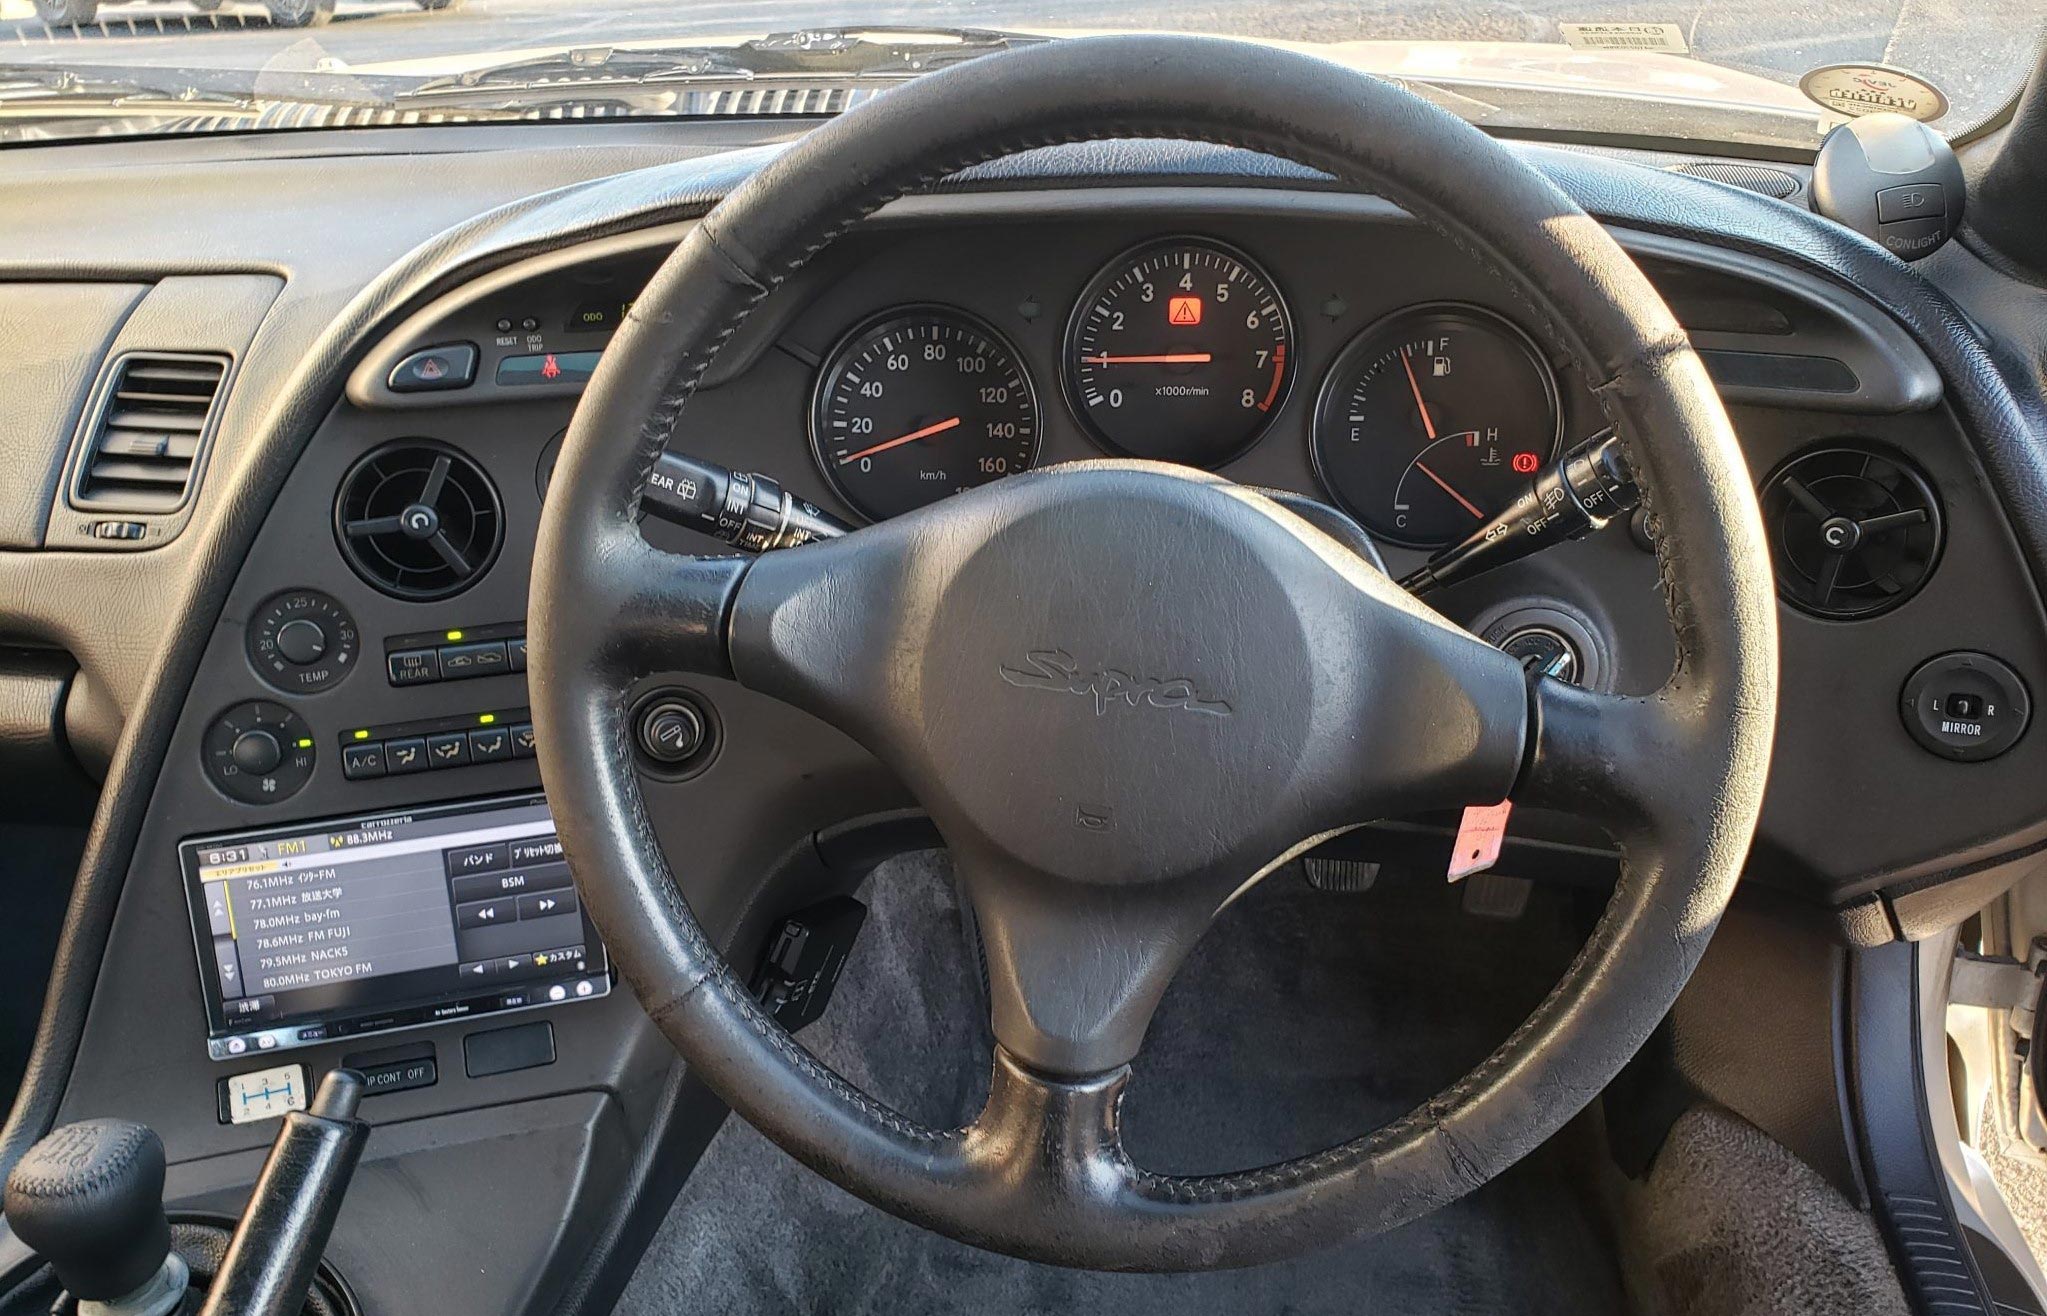 The Toyota RZ Steering Wheel